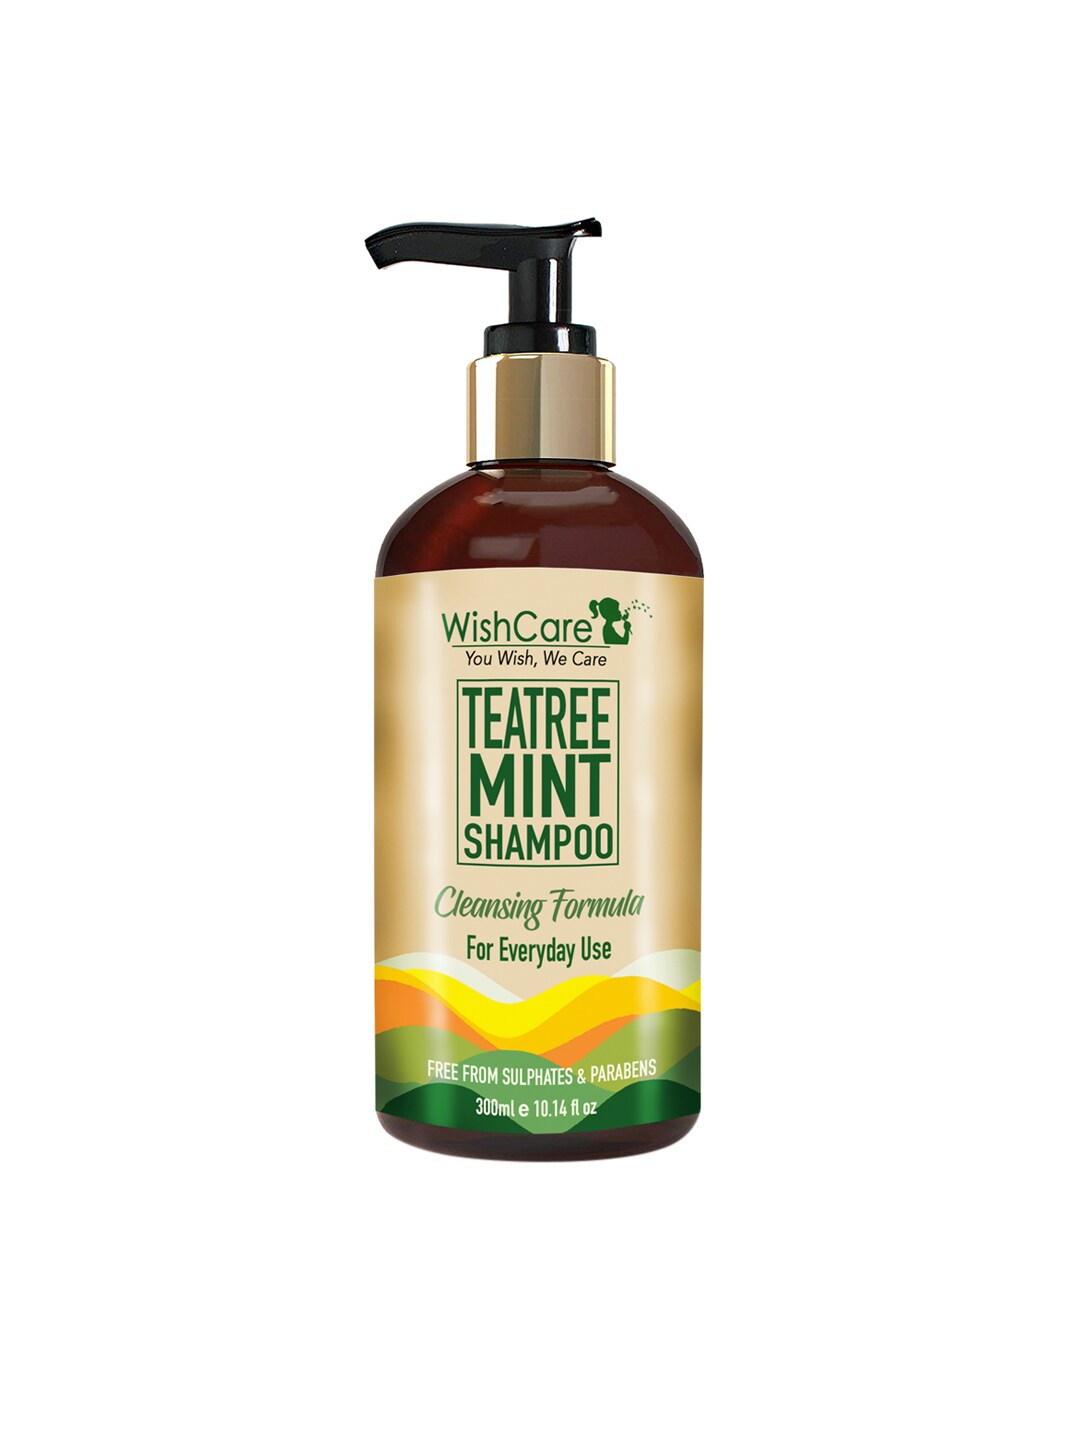 Wishcare Unisex Tea Tree Mint Shampoo - Cleansing Formula 300 ml Price in India